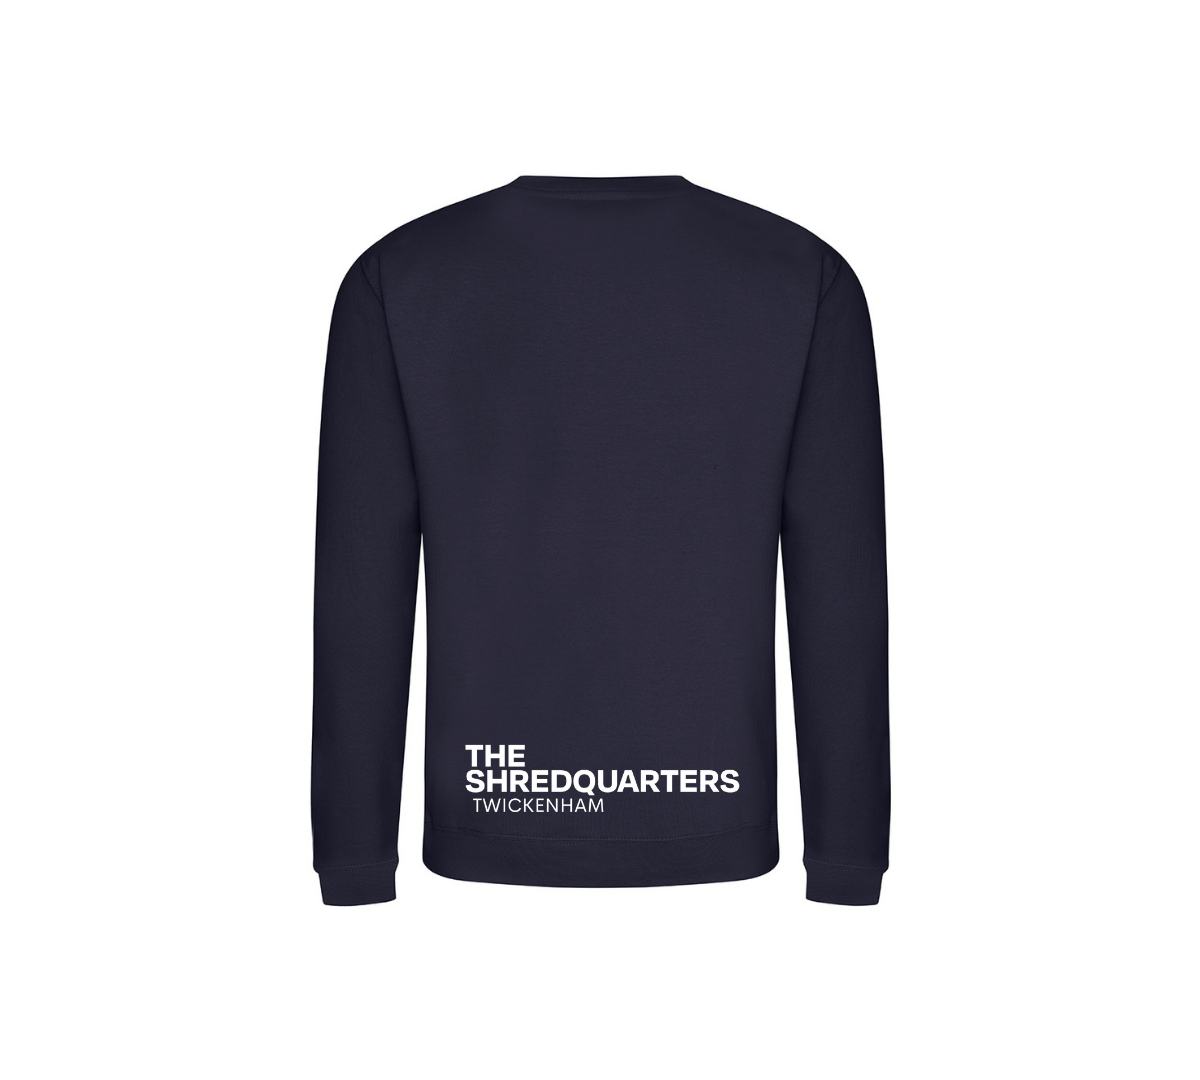 The Shredquarters Twickenham Sweater